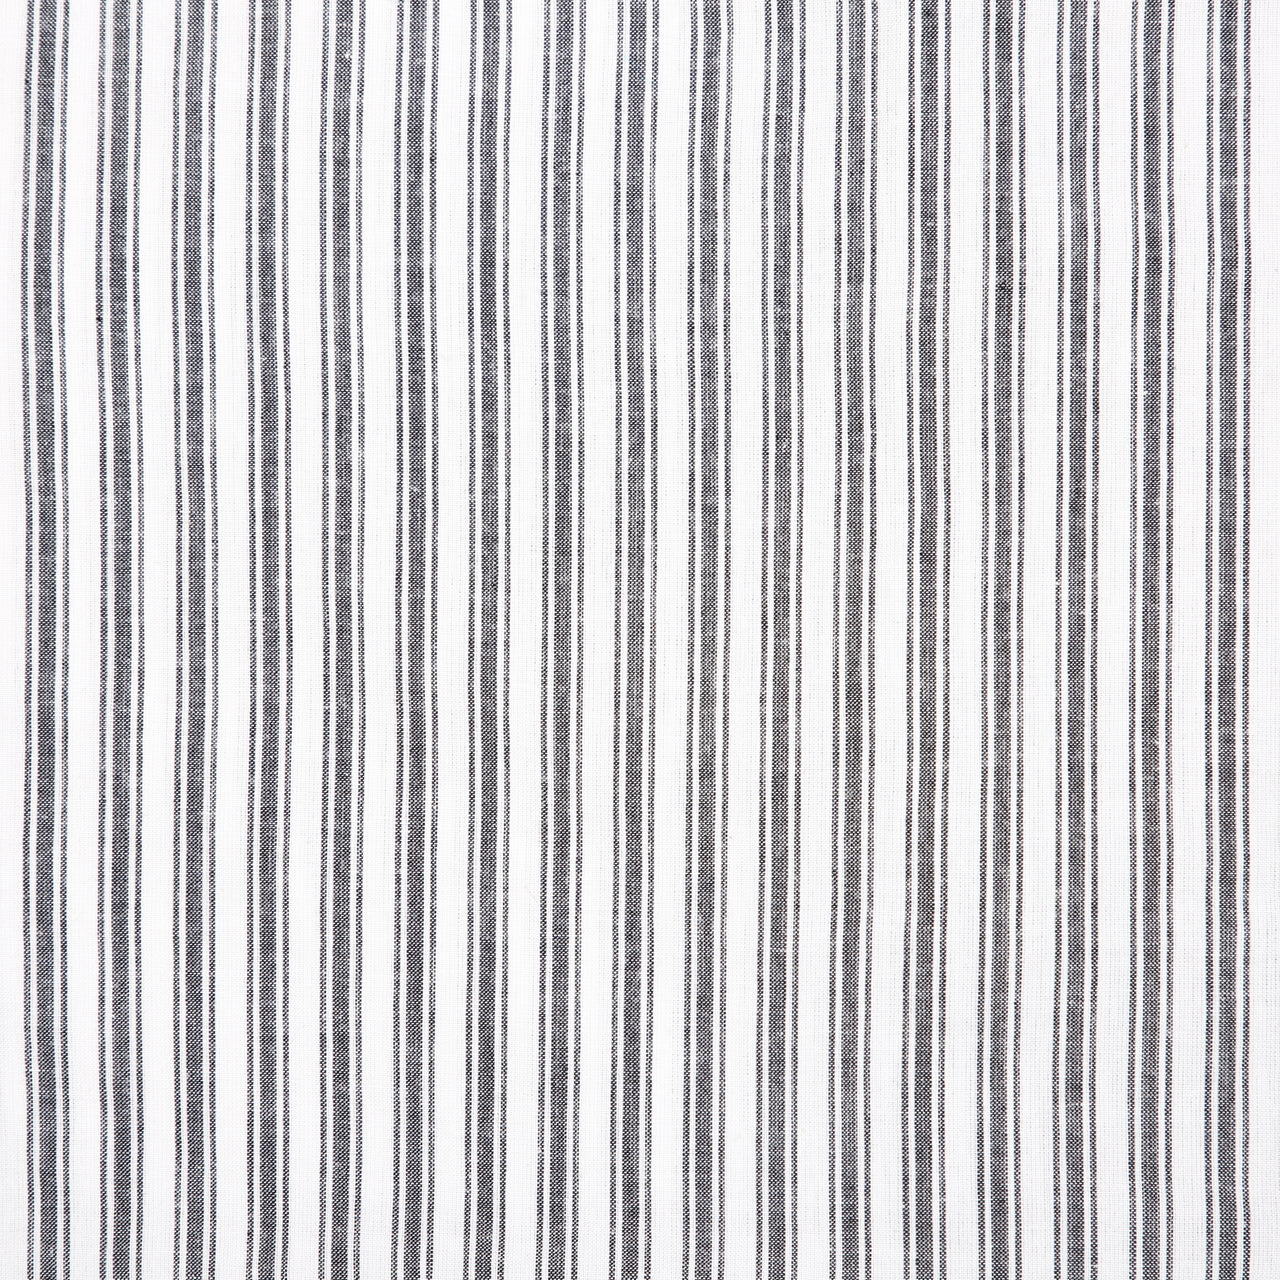 Sawyer Mill Black Ticking Stripe Fabric Euro Sham 26x26 VHC Brands